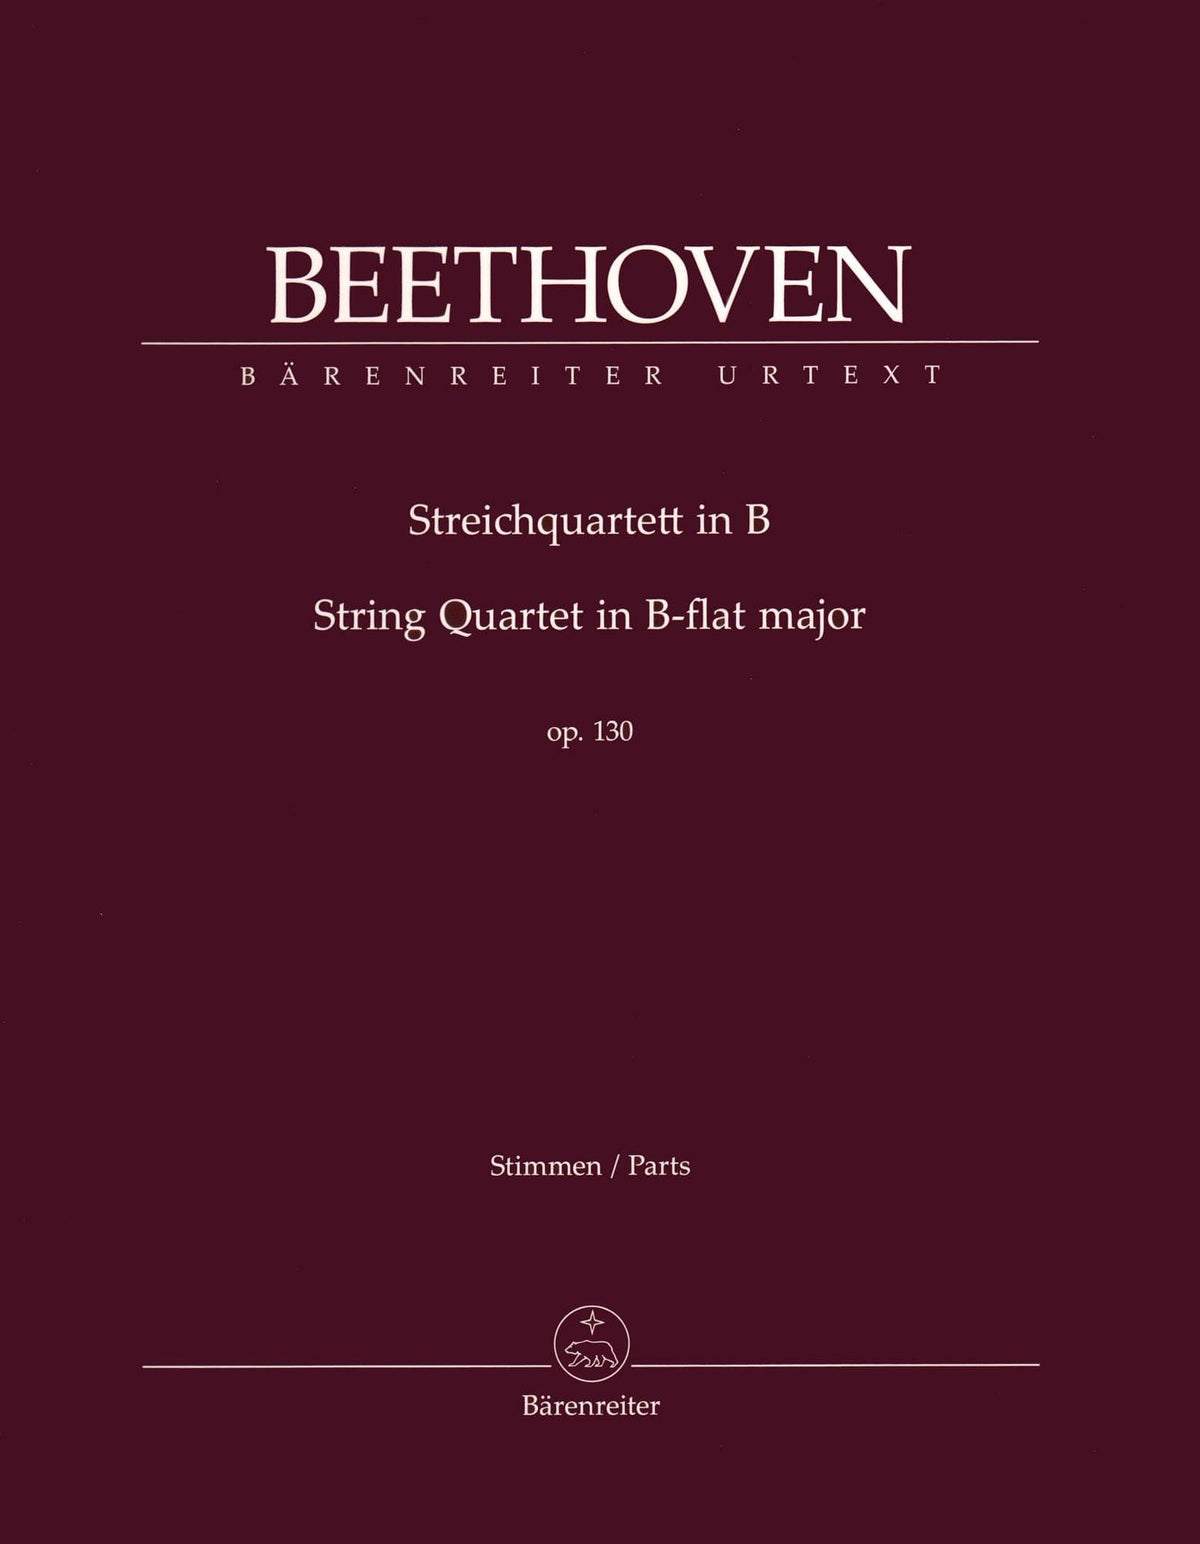 Beethoven, Ludwig - String Quartet in B-flat Major, Op 130 - Parts ONLY - edited by Jonathan Del Mar - Barenreiter URTEXT